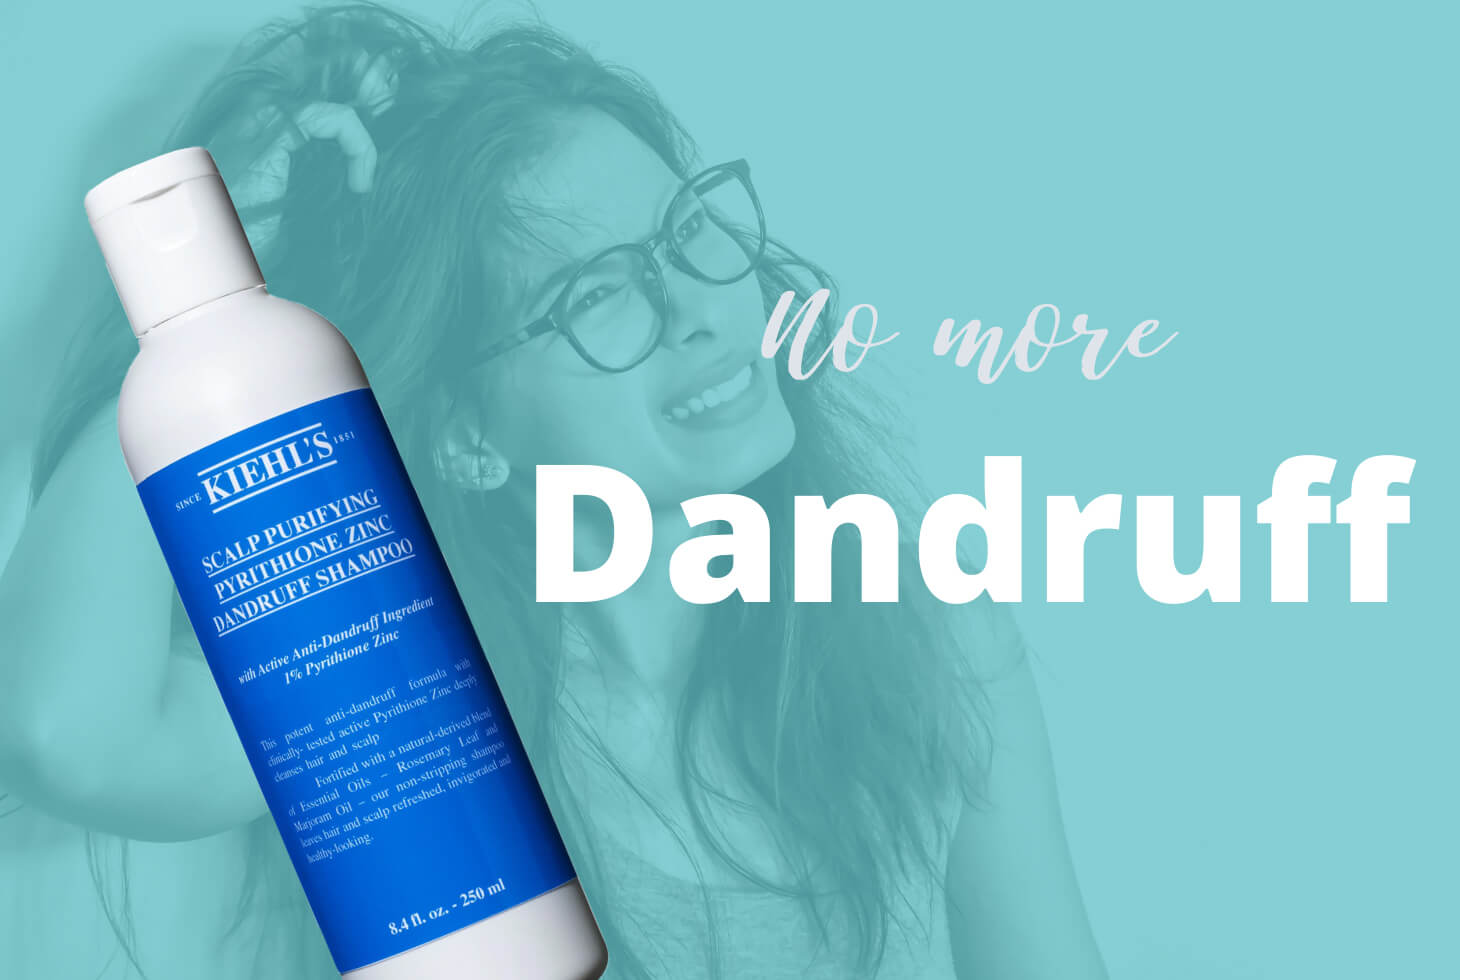 Kiehl’s Scalp Purifying Anti-Dandruff Shampoo Review